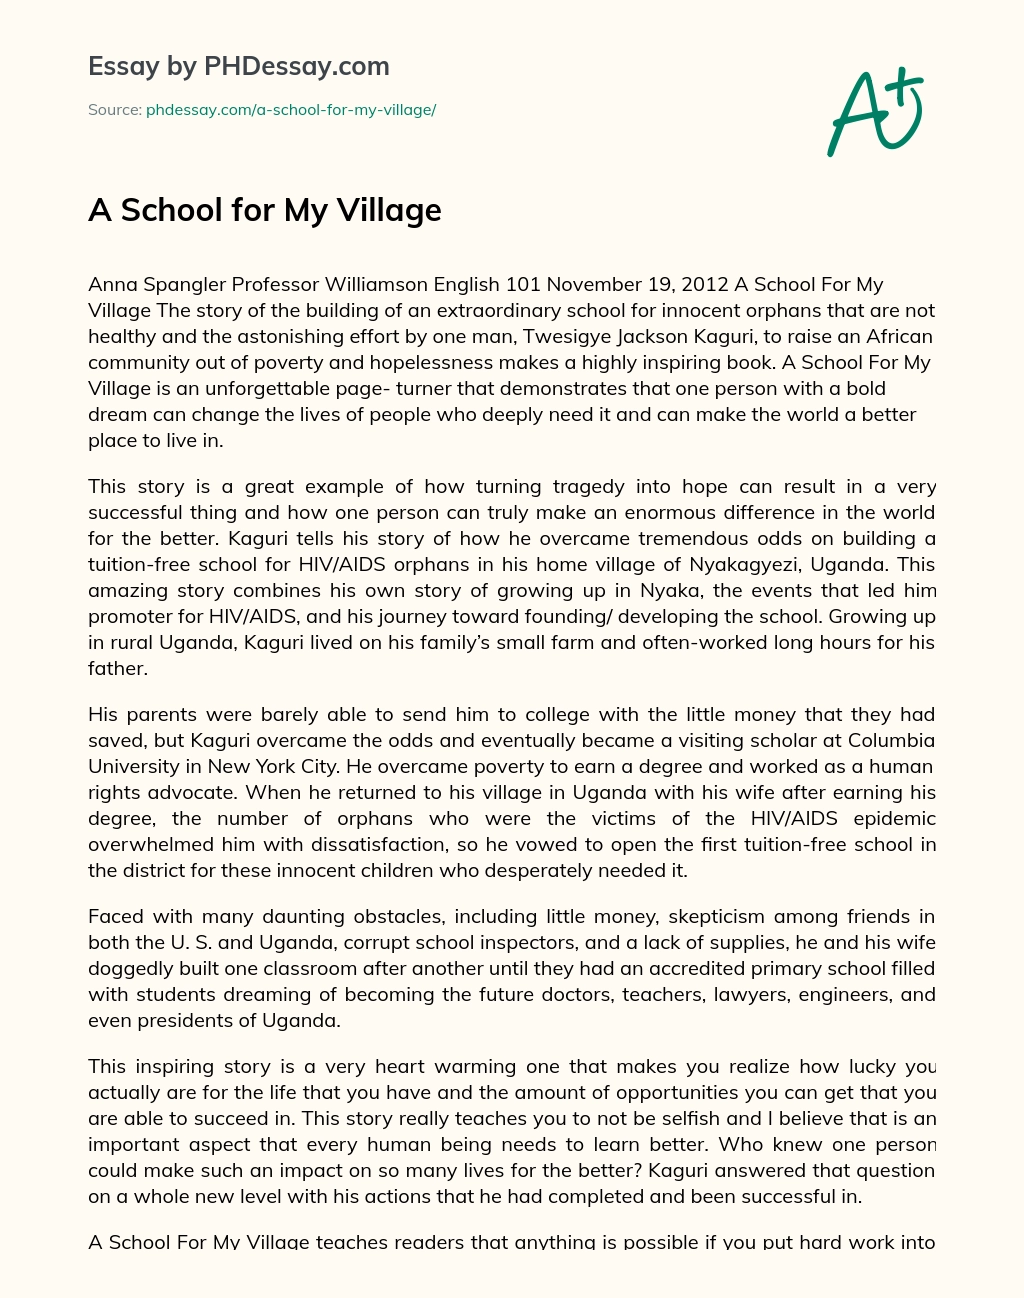 A School for My Village essay